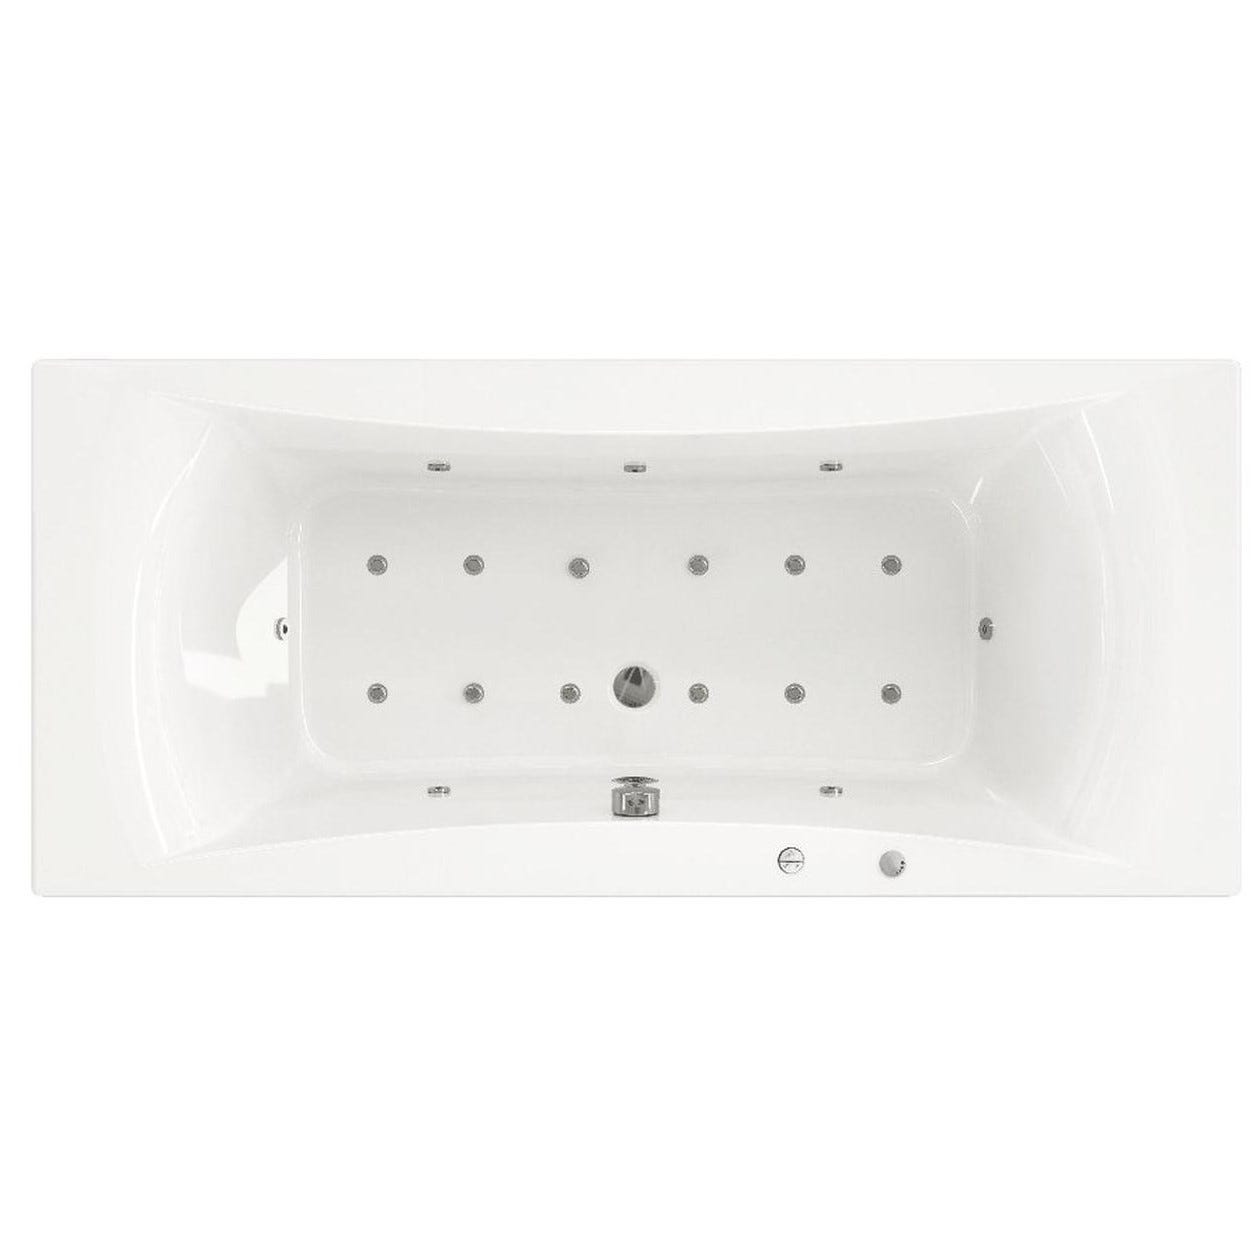 Baignoire balnéo CONCERTO 170x75 sur châssis métal, système balnéo SILENCE & AIR tête bain à gauche 3